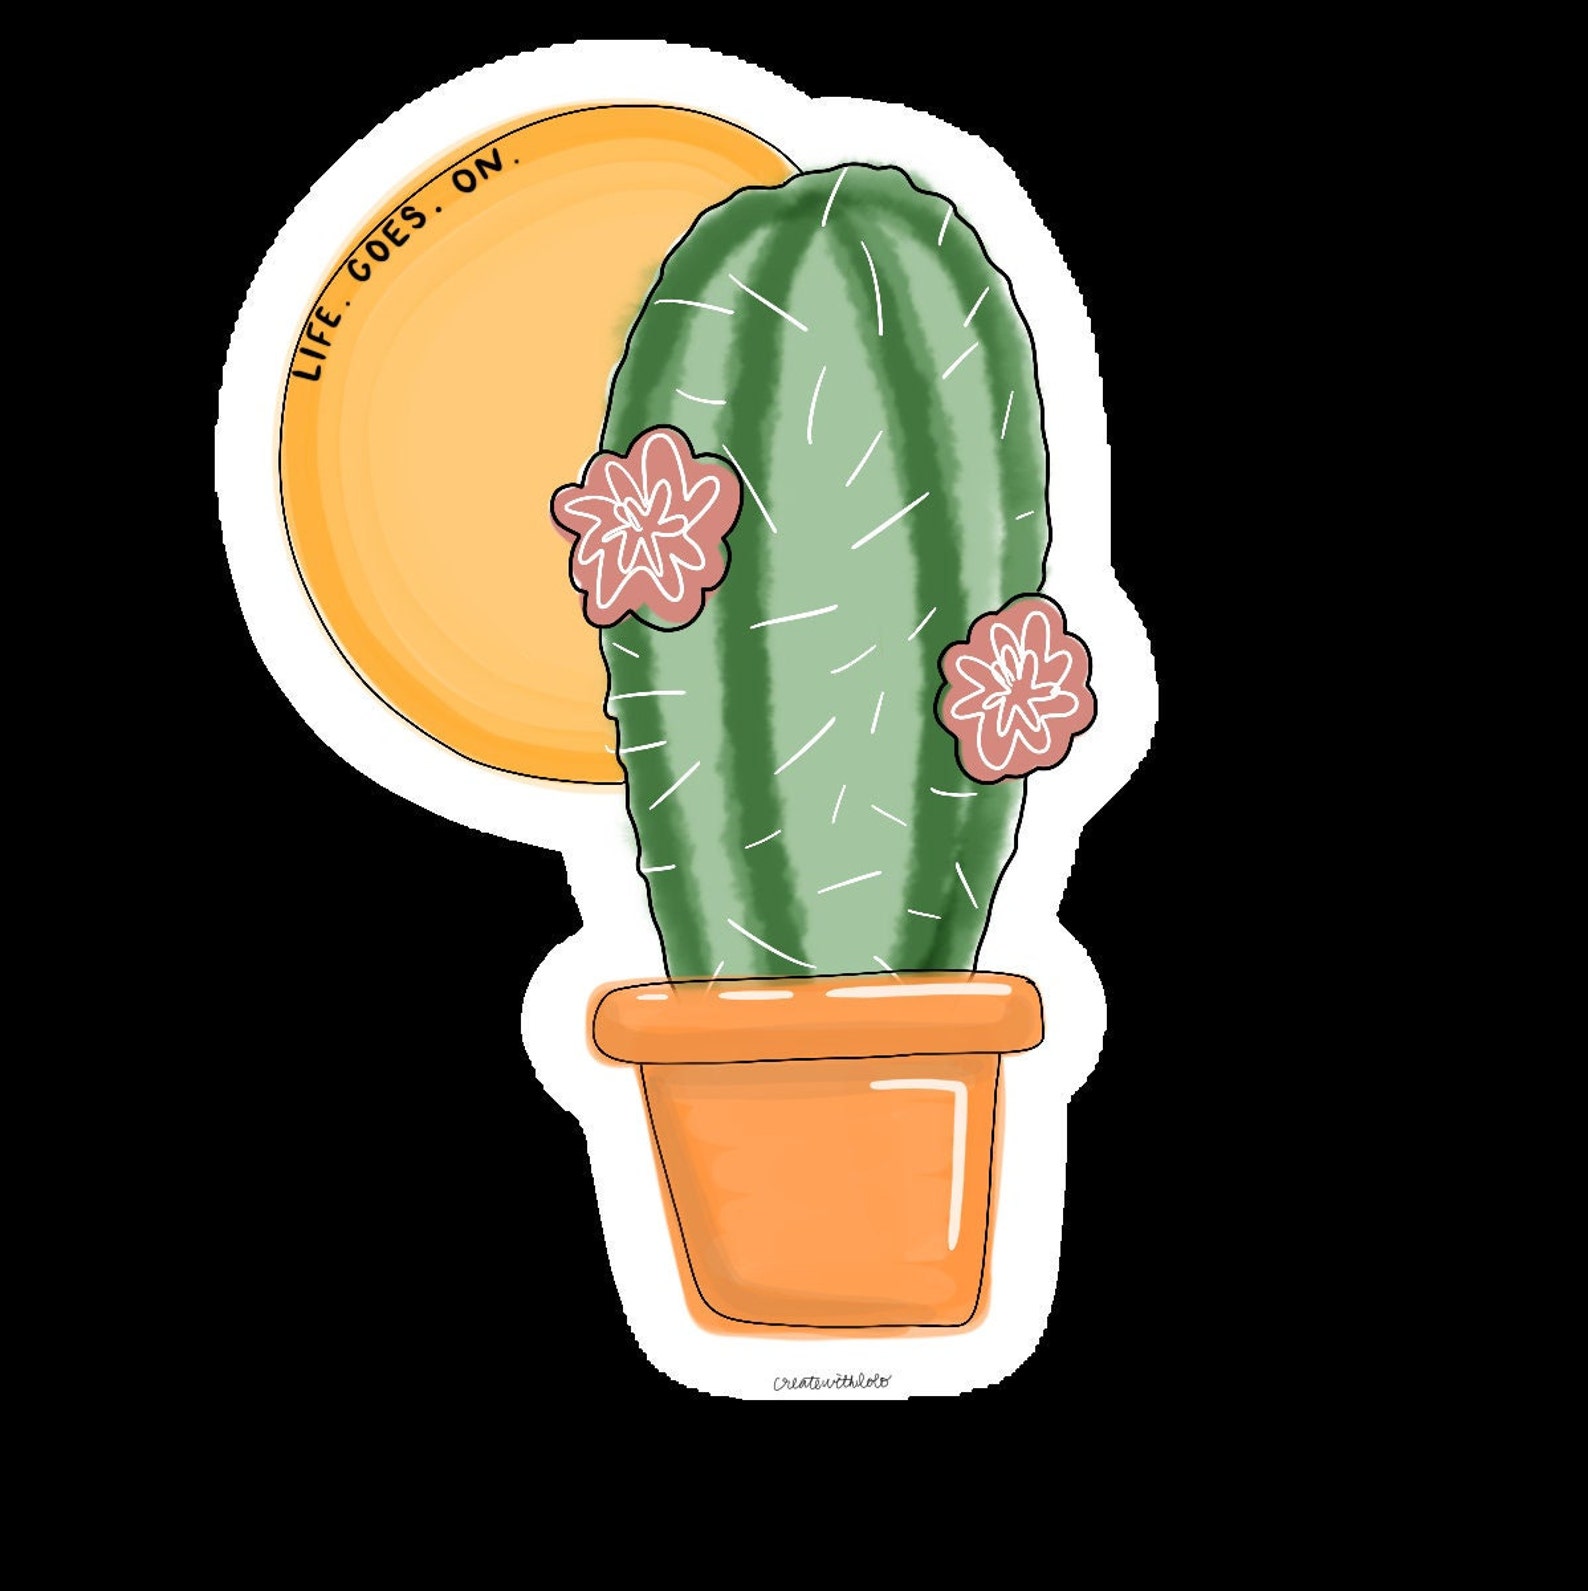 Cactus Stickers, Downloadable Cactus Prints, Digital Cactus Stickers ...